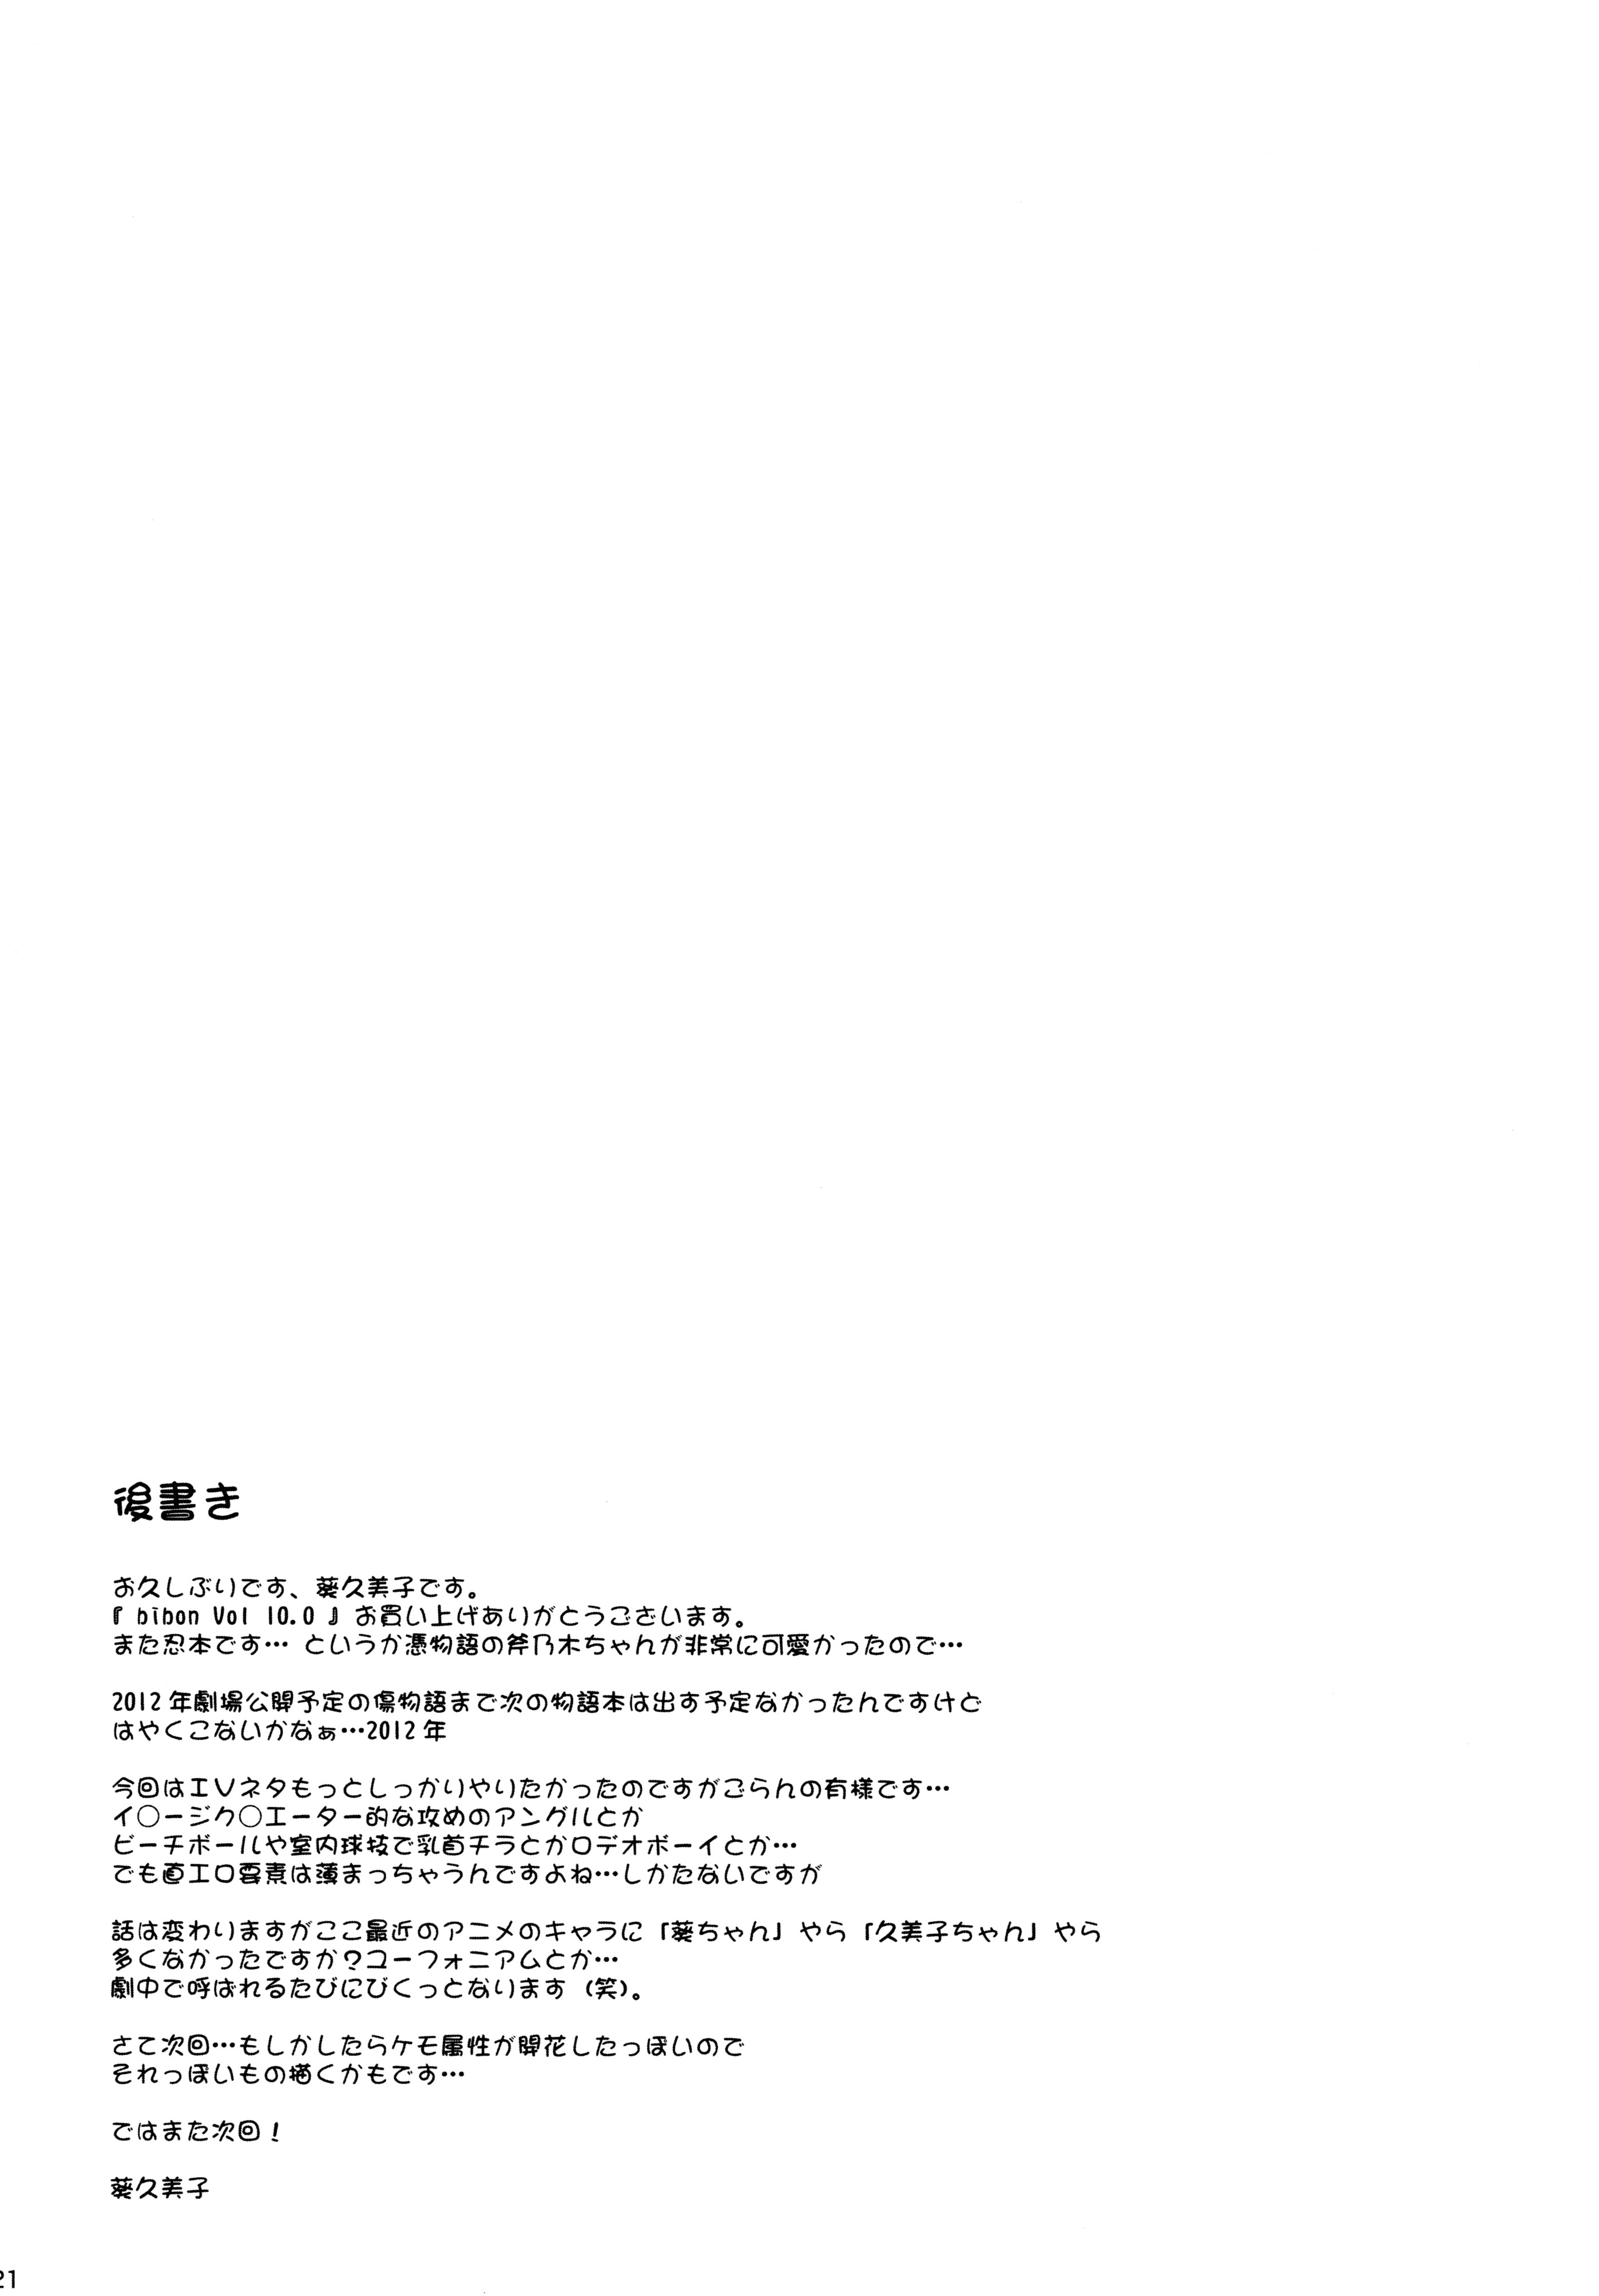 (C88) [CHILLED HOUSE (葵久美子)] bibon Vol 10.0 (化物語)